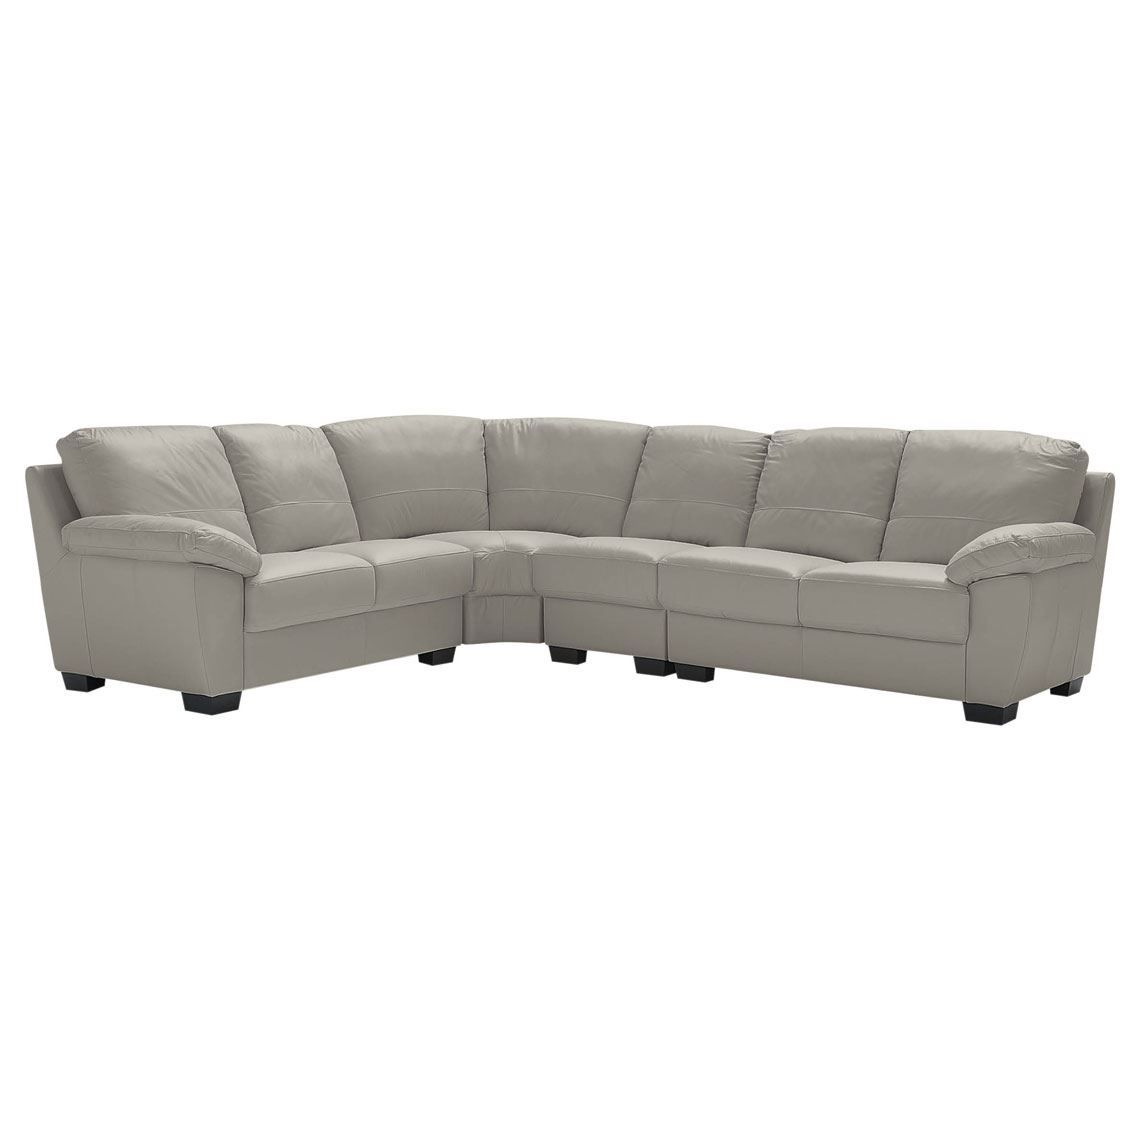 Lucas 6 Seat Leather Corner Modular Sofa Silver Grey regarding sizing 1140 X 1140